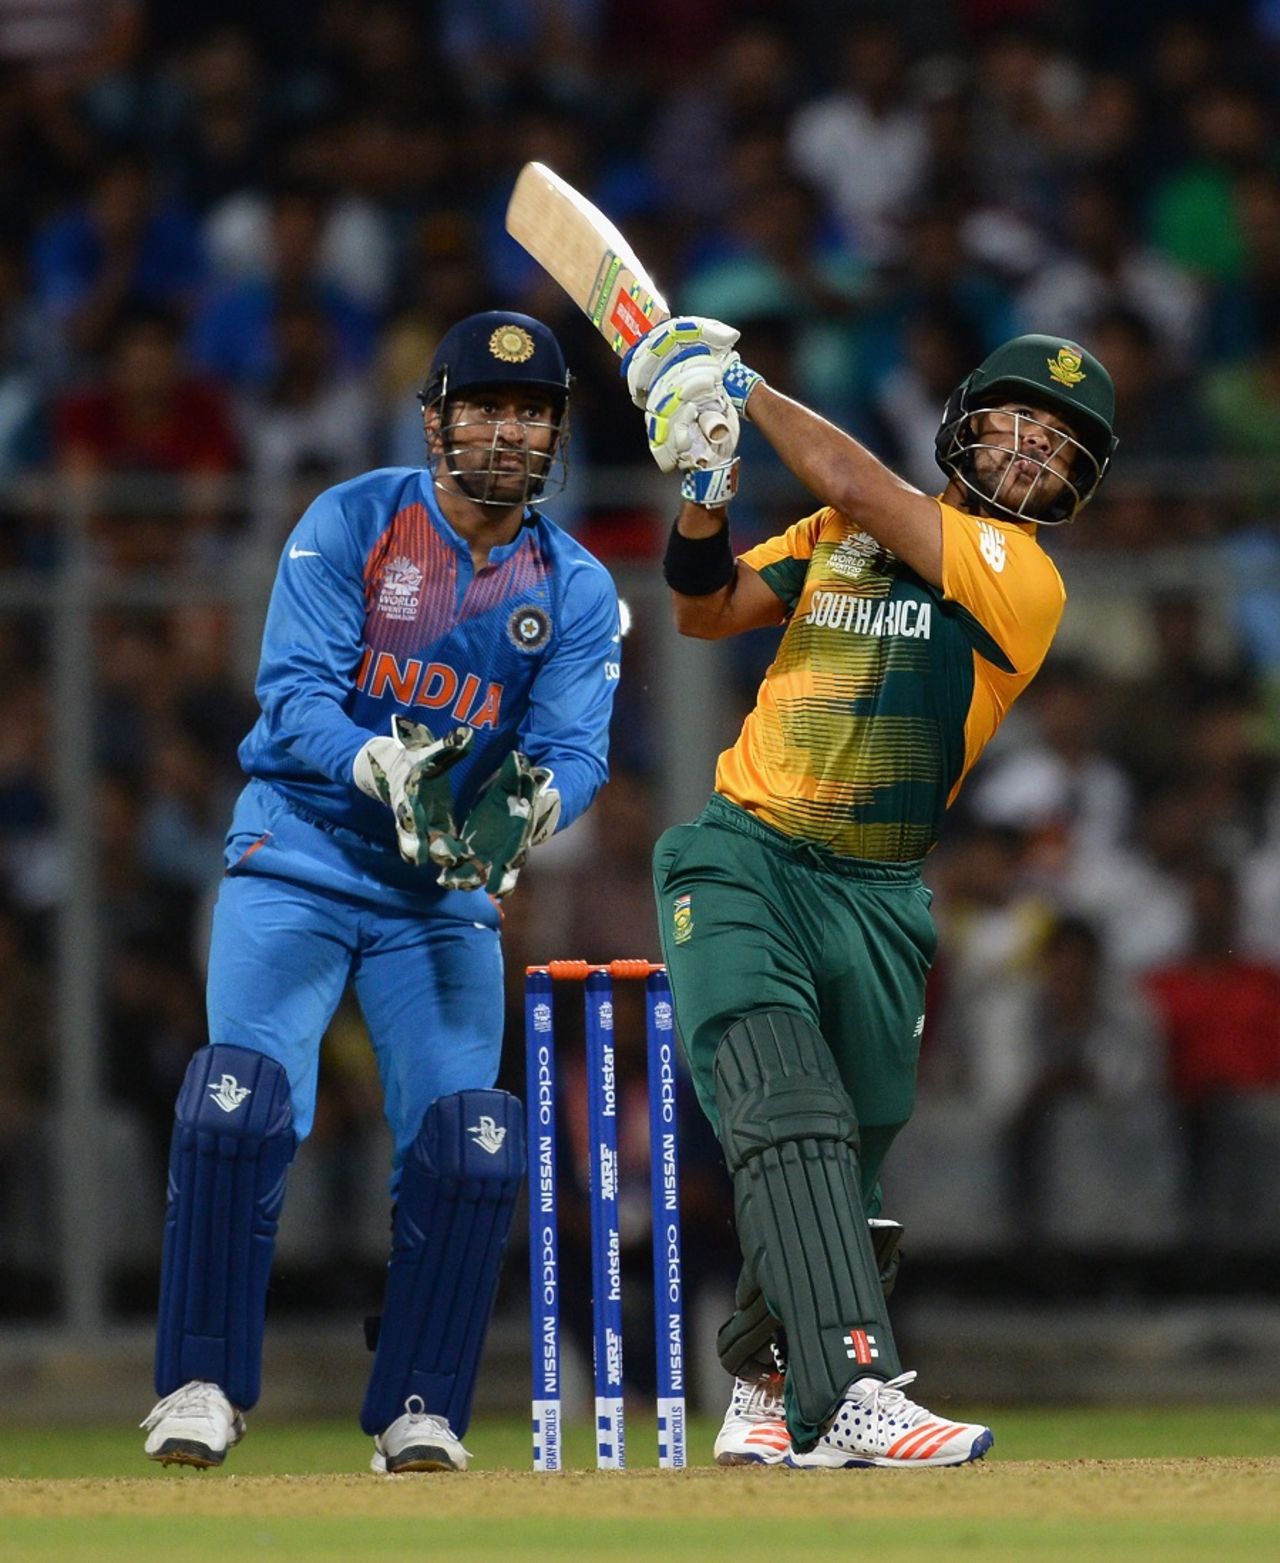 JP Duminy smashes one down the ground, India v South Africa, World T20 warm-ups, Mumbai, March 12, 2016